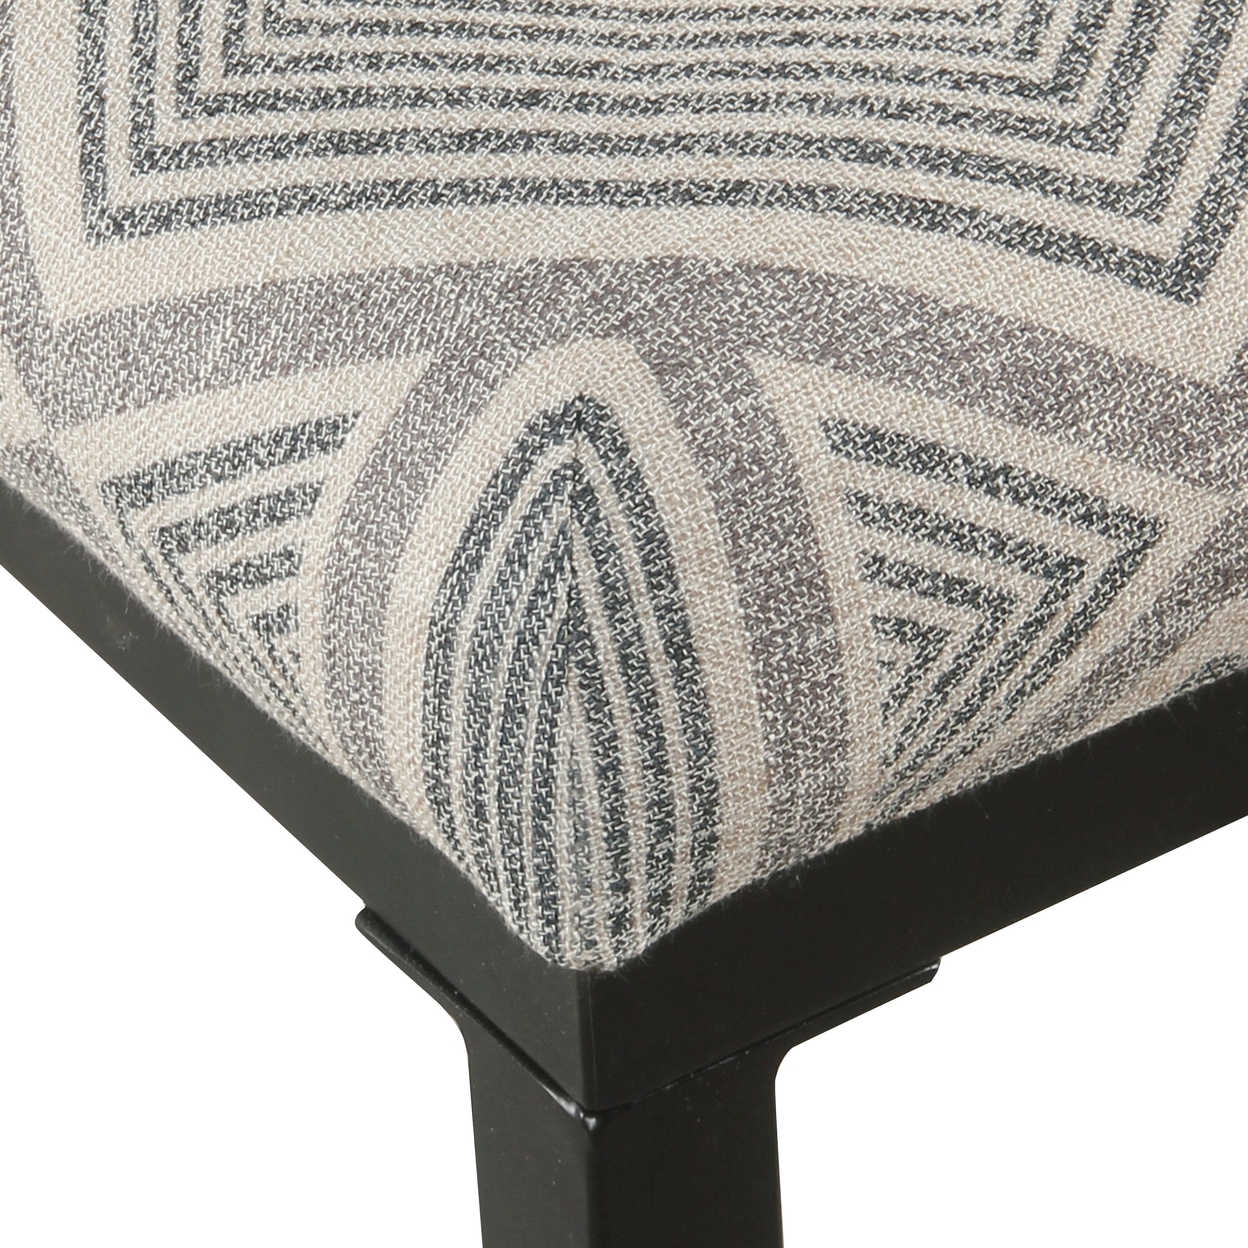 Metal Counter Stool With Geometric Pattern Fabric Upholstered Seat, Gray And Black- Saltoro Sherpi